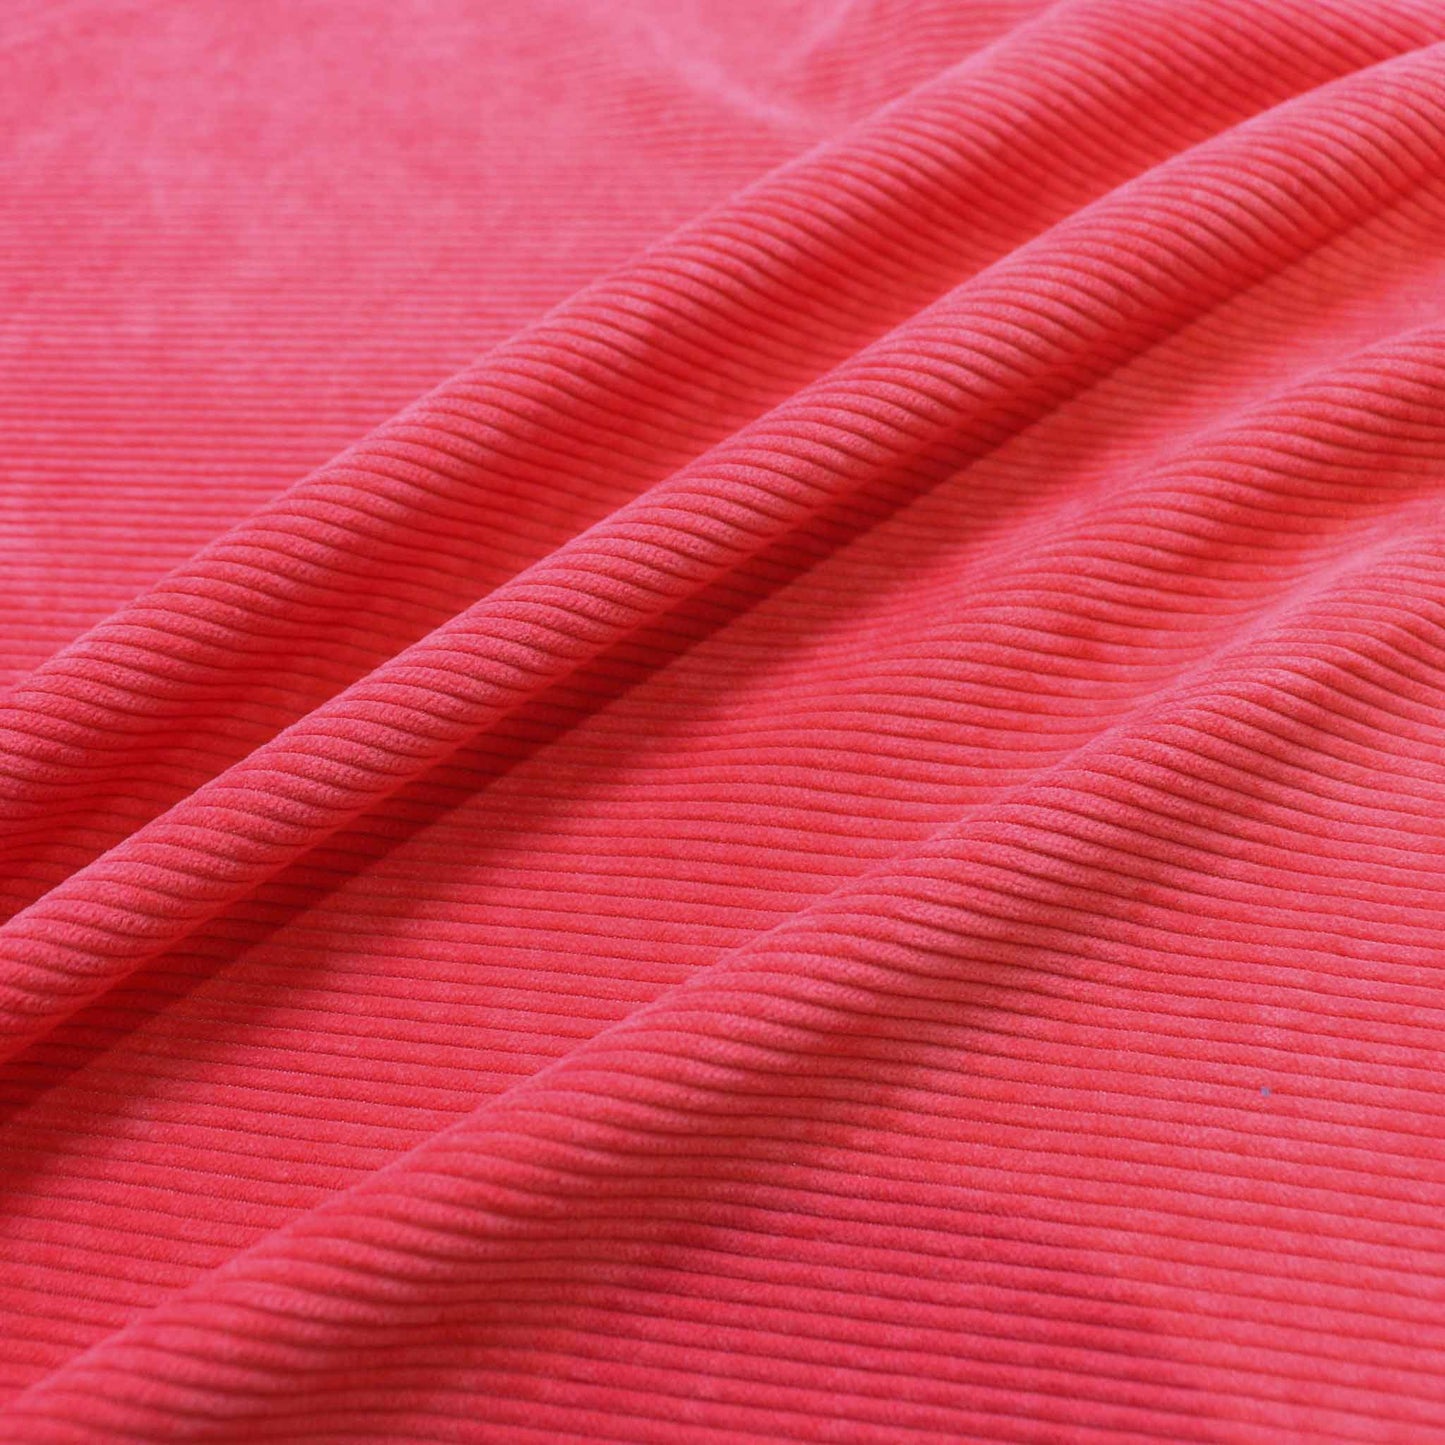 red 8 wale corduroy velvet dressmaking fabric